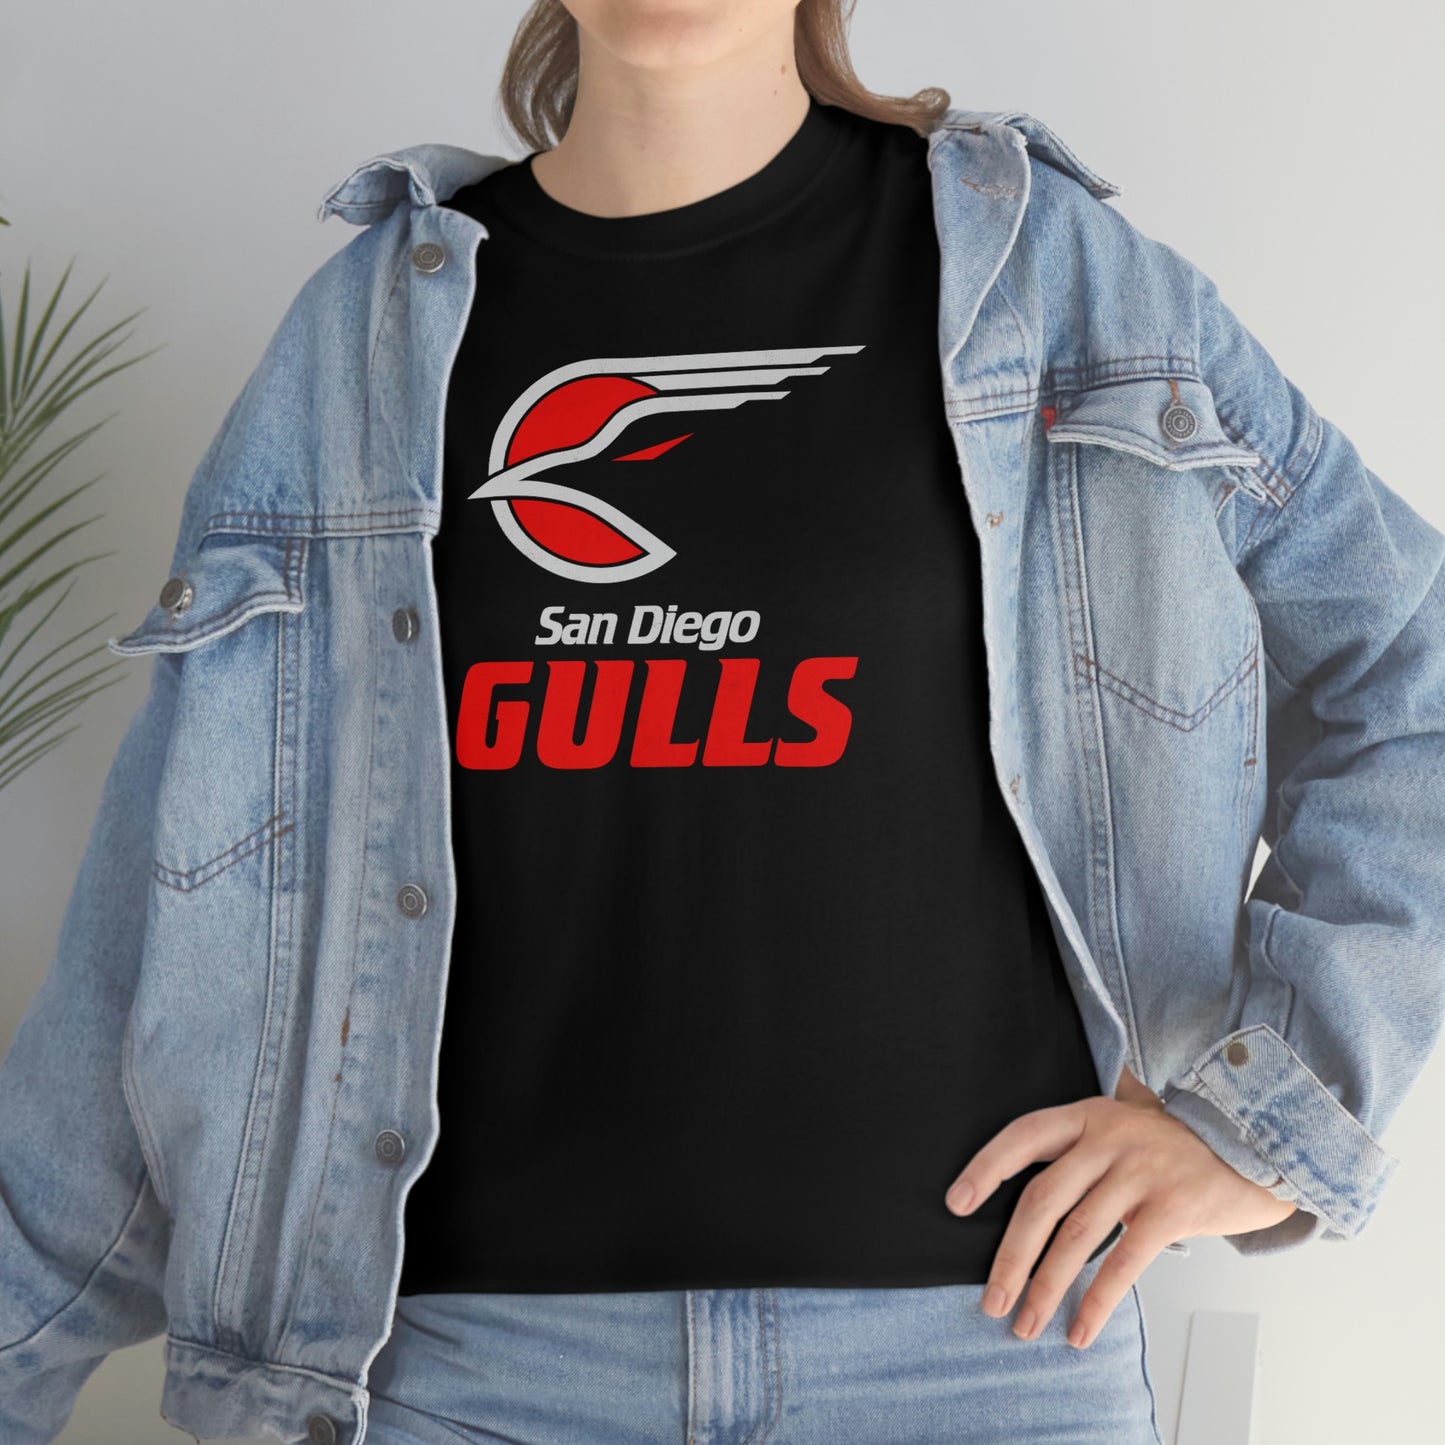 San Diego Gulls T-Shirt